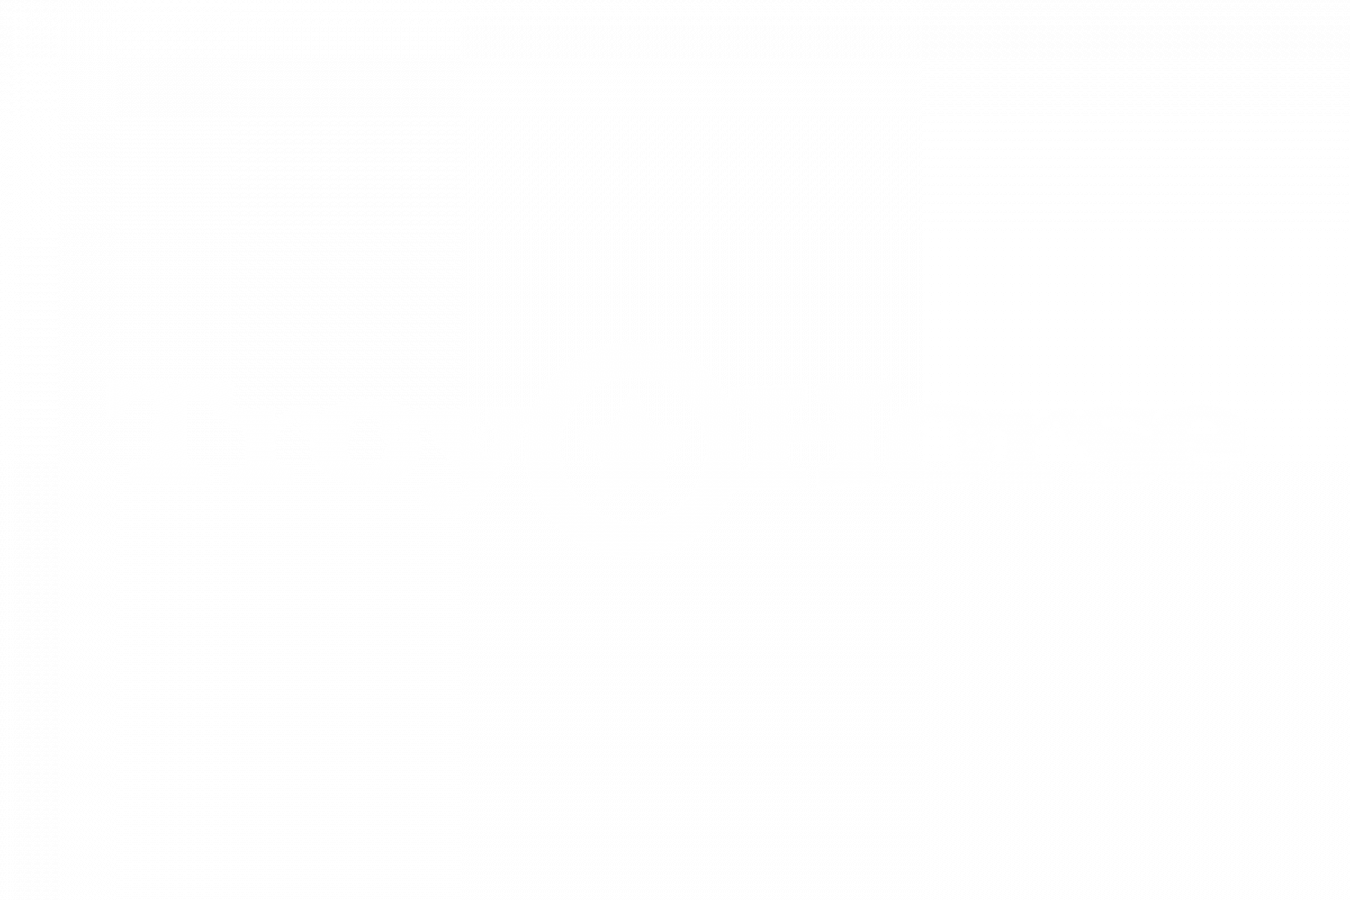 Troy Horse